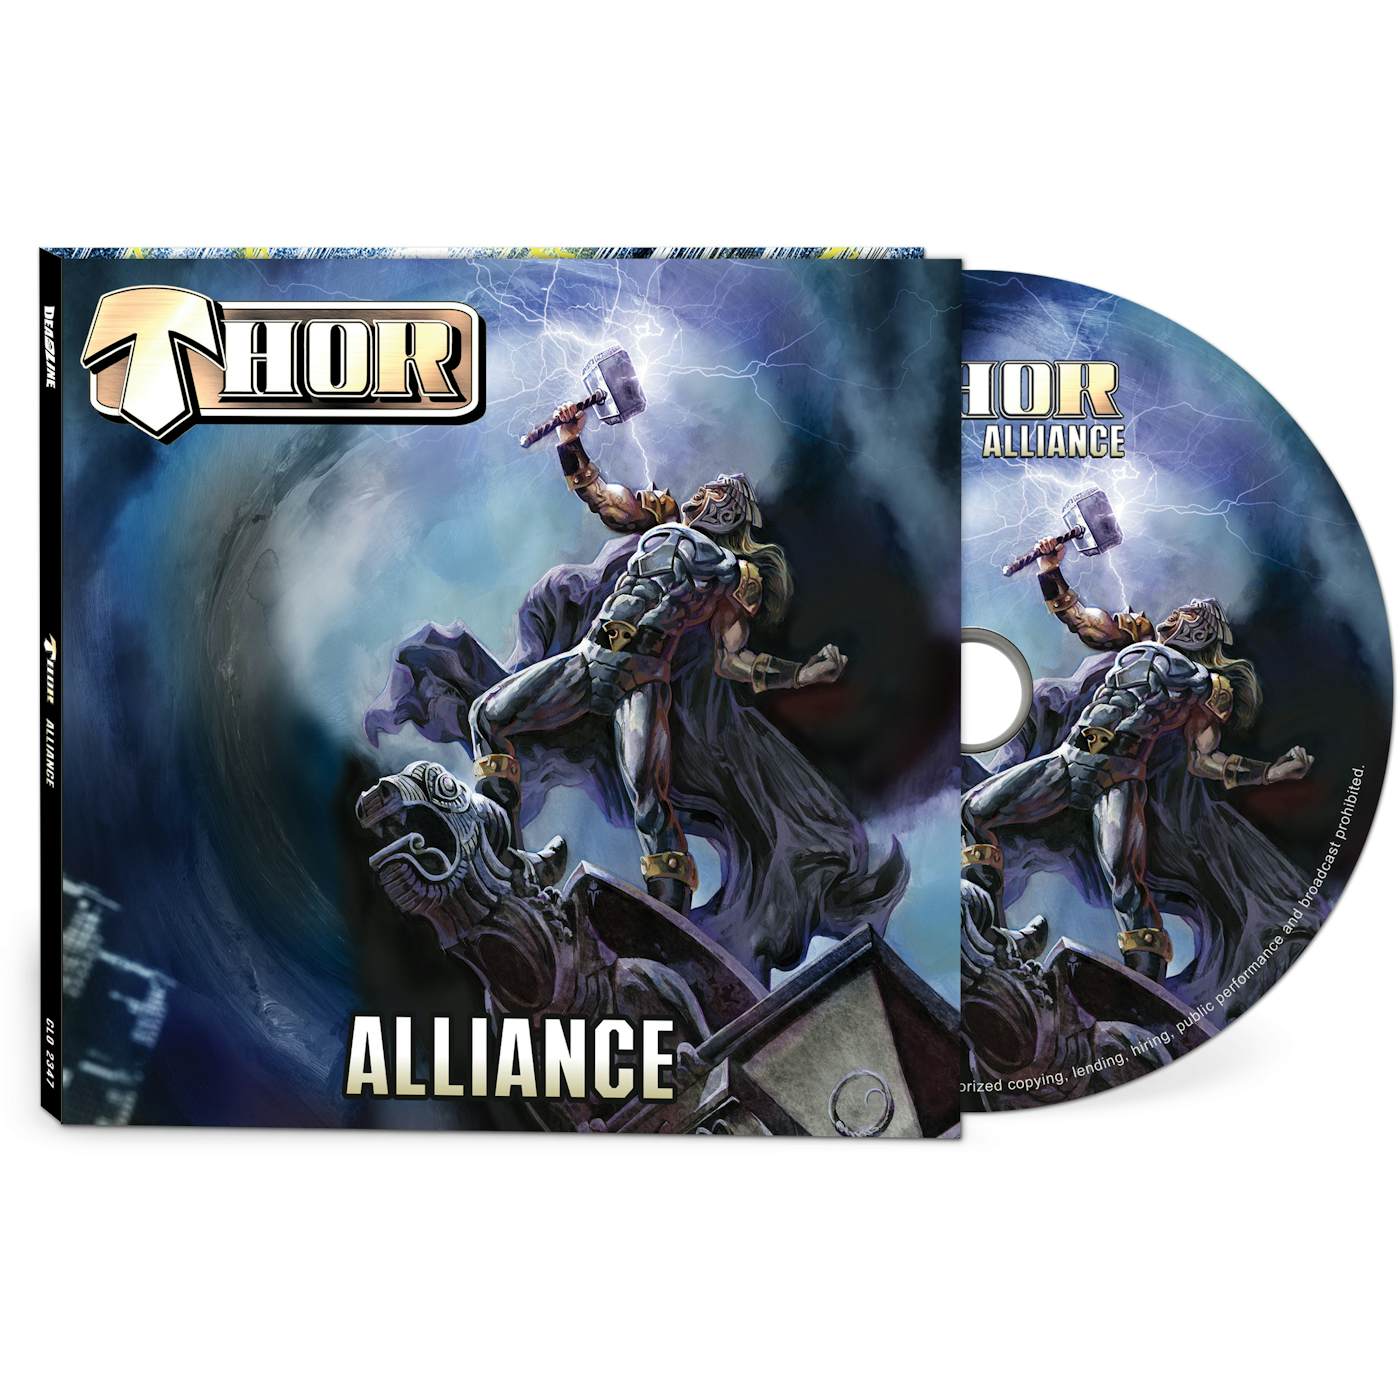 Thor ALLIANCE CD